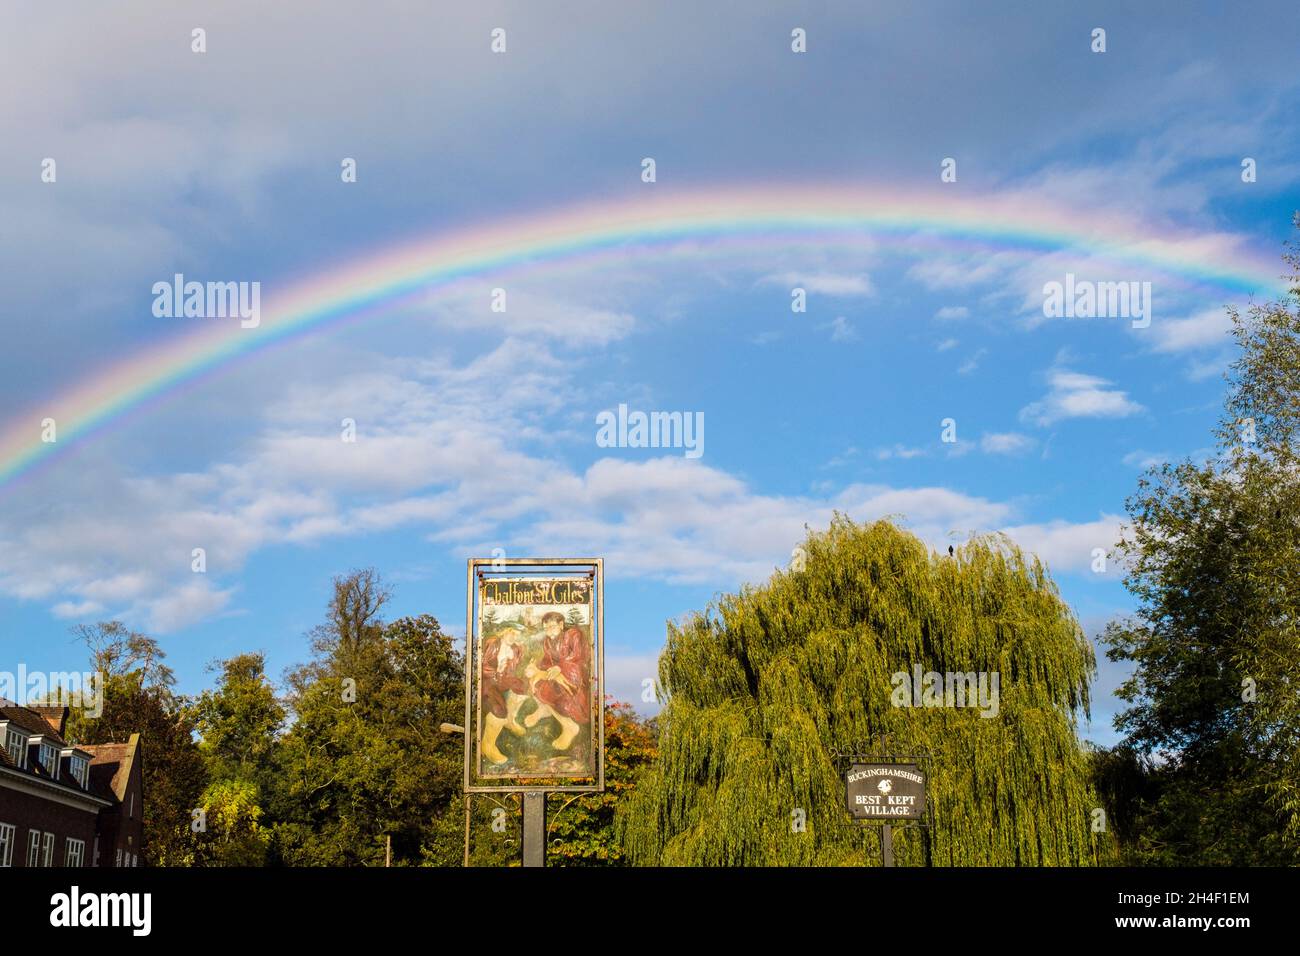 Voller Regenbogen am Himmel über dem Dorfschild. High Street, Chalfont St Giles, Buckinghamshire, England, Großbritannien, Großbritannien Stockfoto